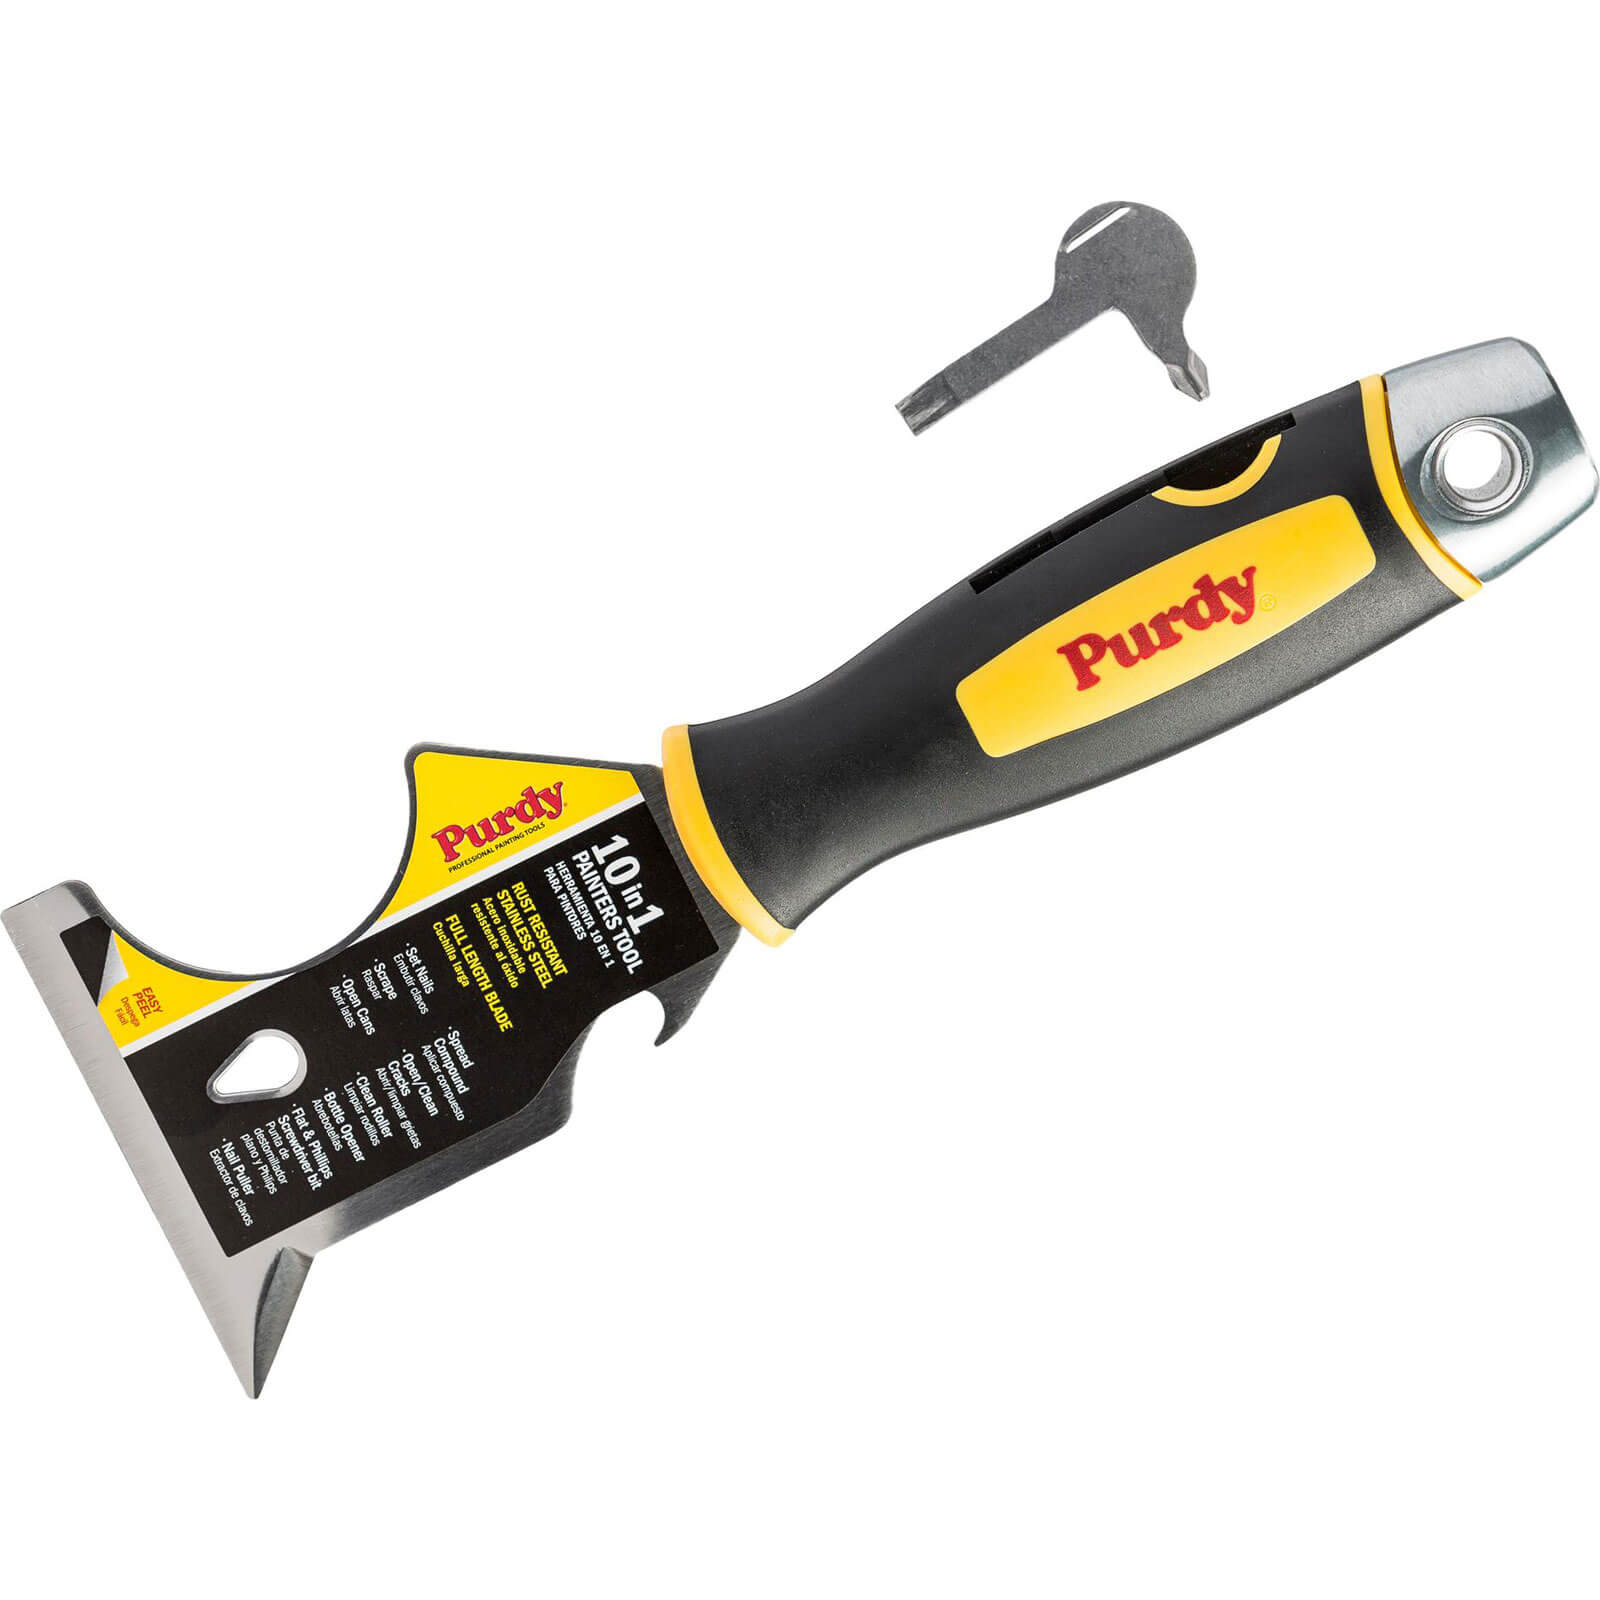 Purdy Premium 10 In 1 Multi Tool Scraper Hammer Roller Cleaner Nail Puller